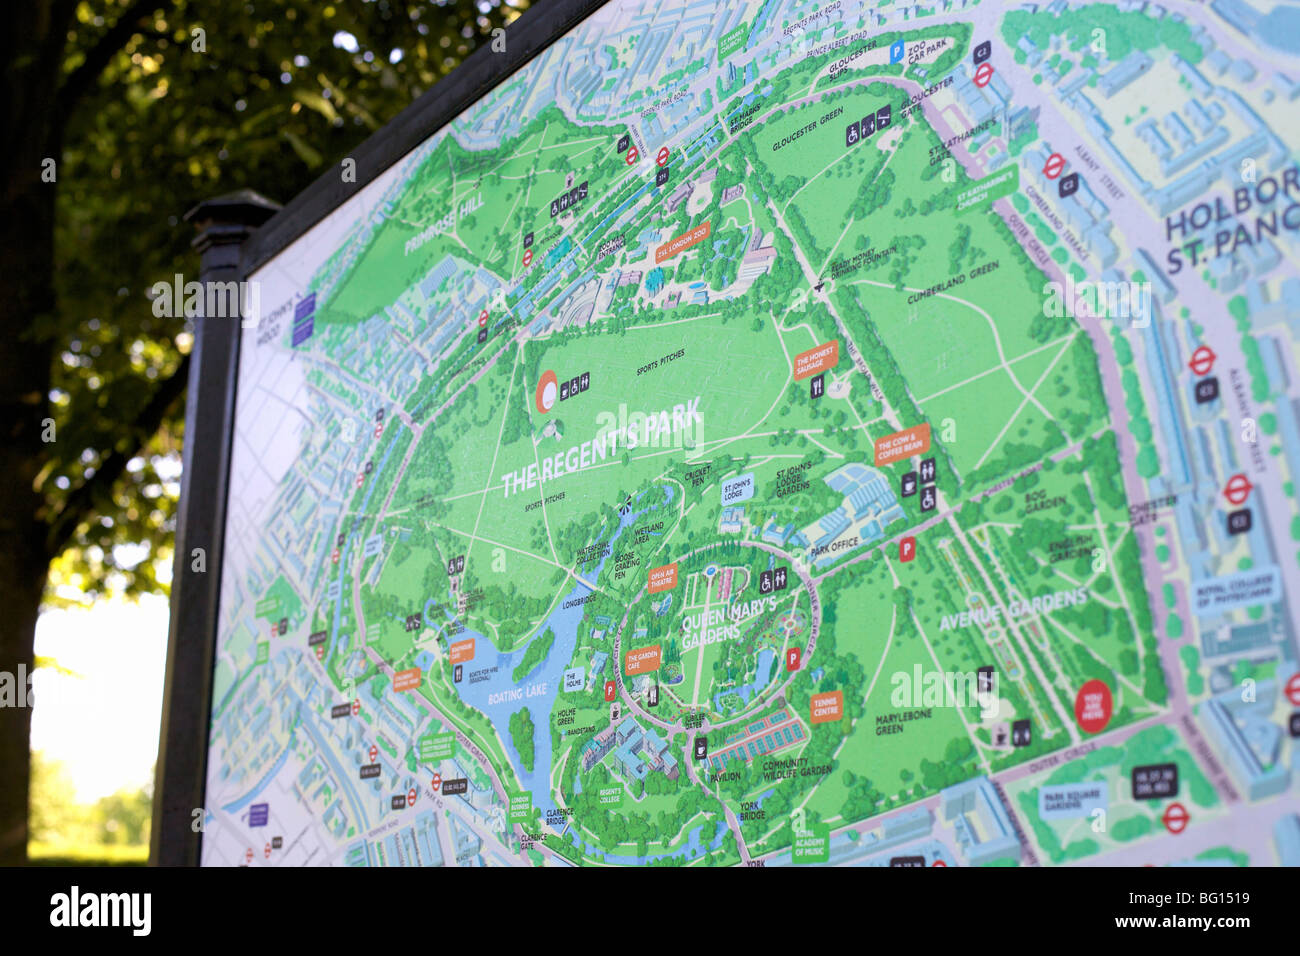 Park Map Regents Park London England United Kingdom Europe